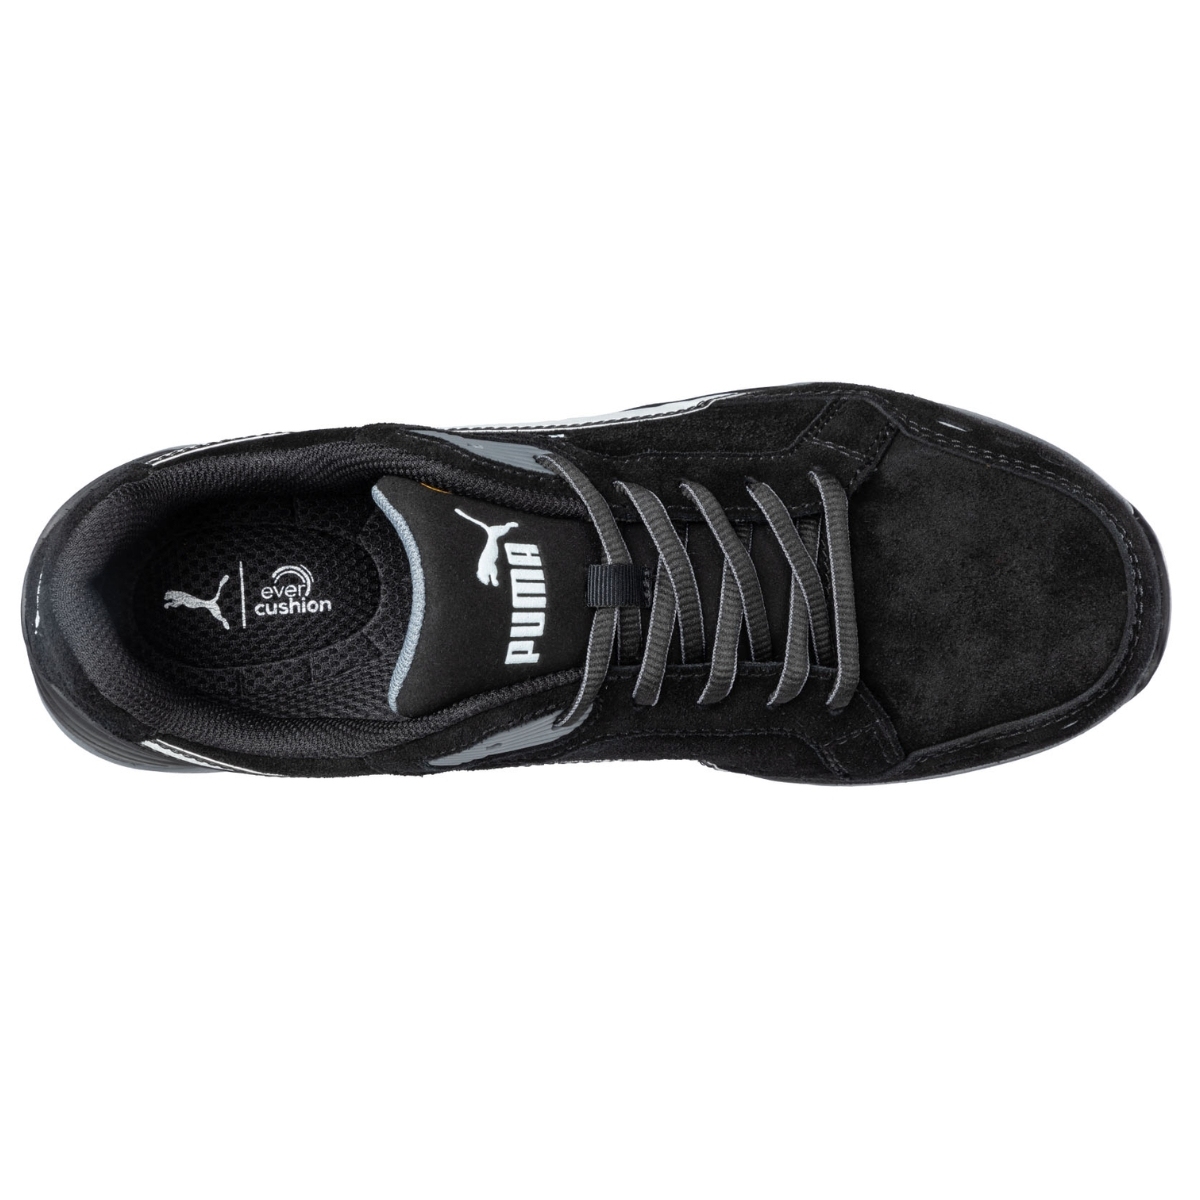 Zapato deportivo Puma Safety de ante negro 